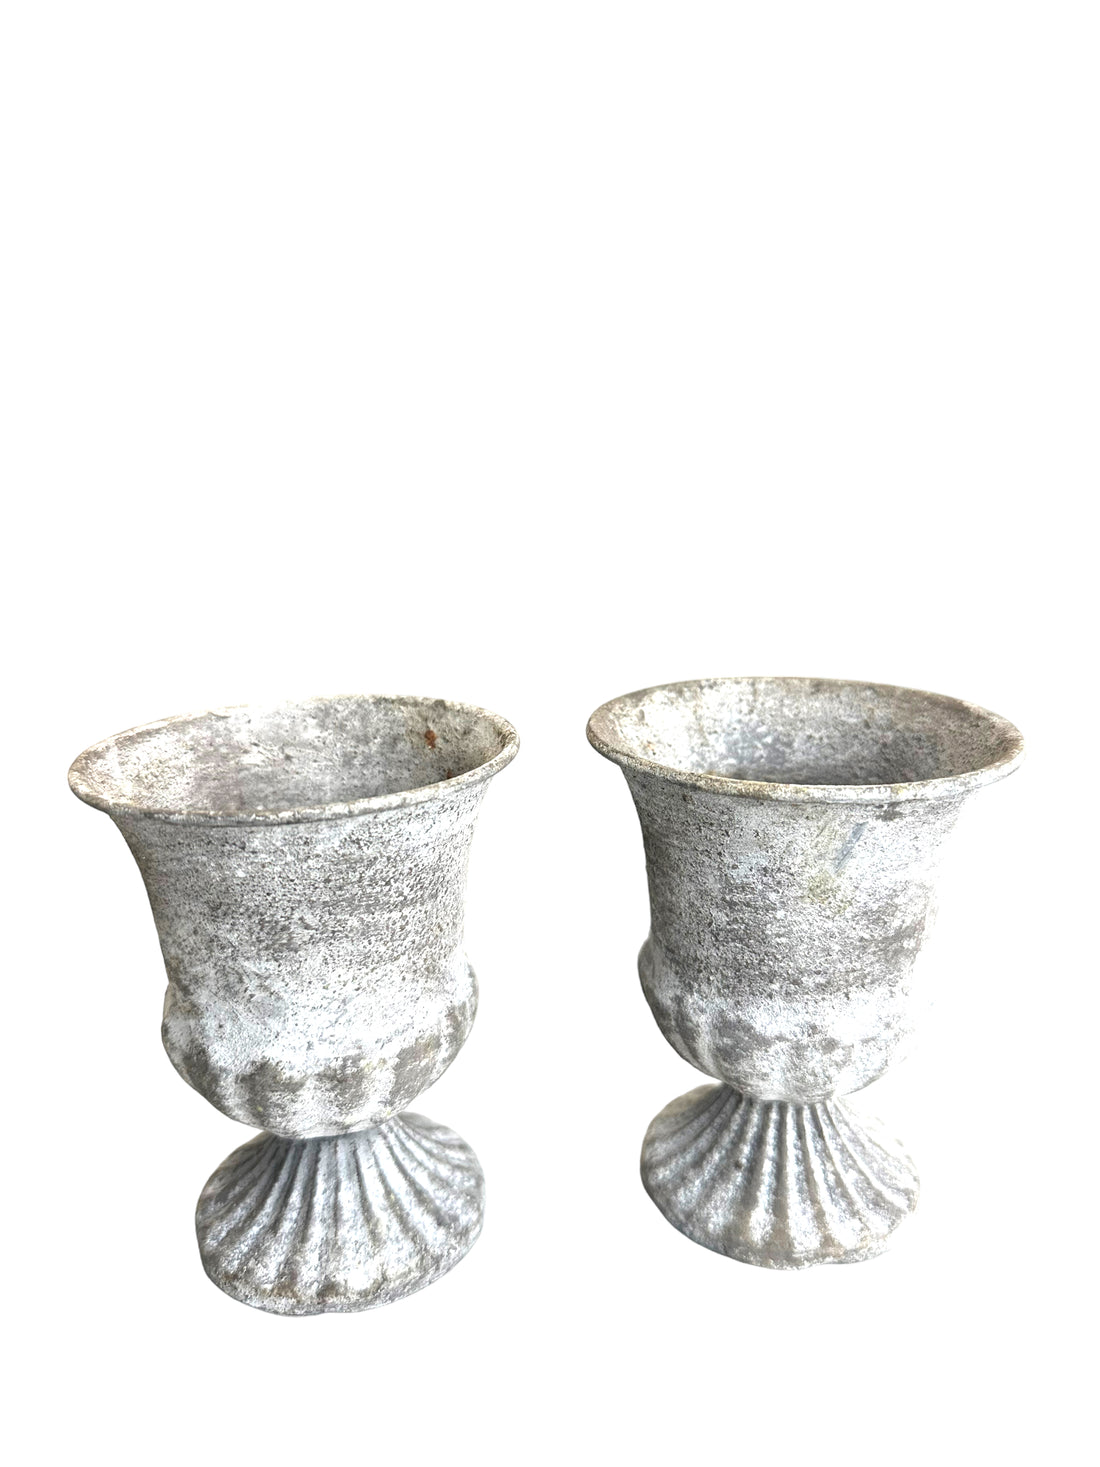 Decorative Urns (Small)